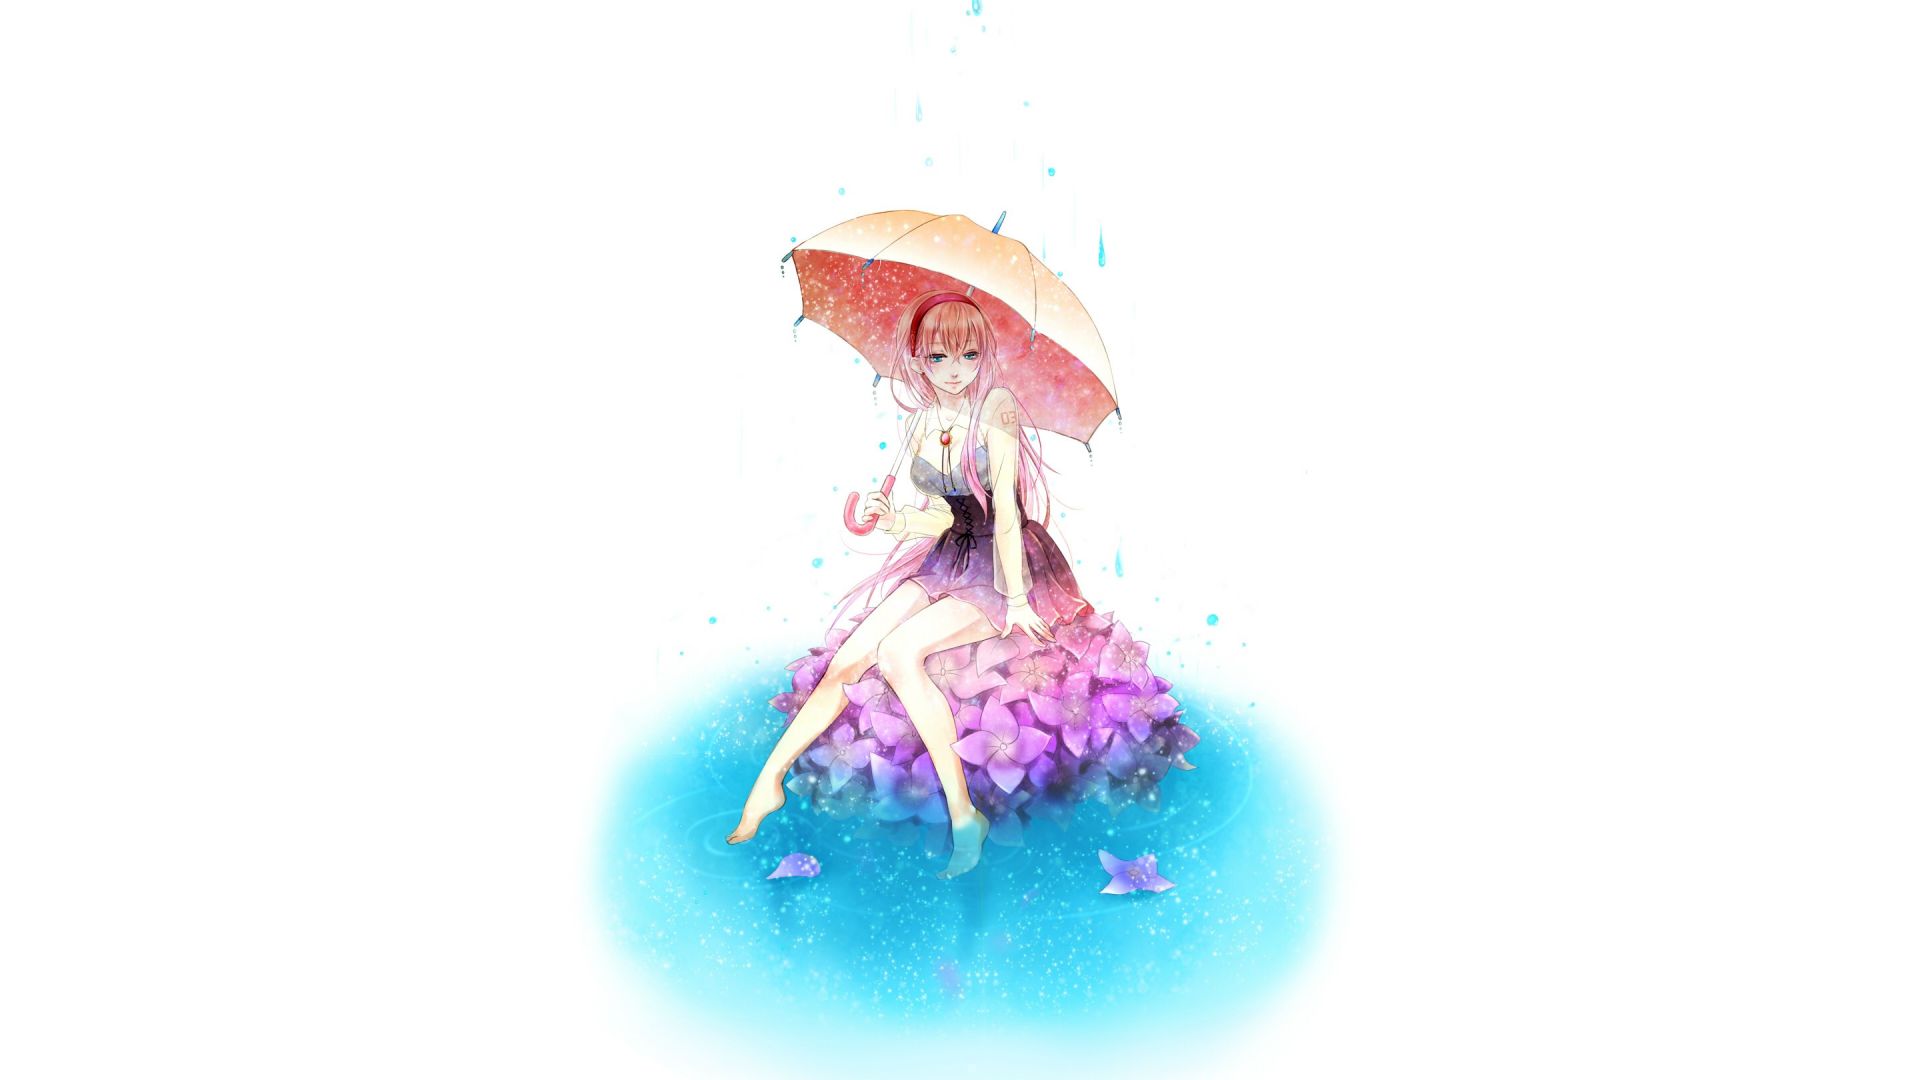 Wallpaper Megurine Luka, Vocaloid, minimal, anime girl with umbrella